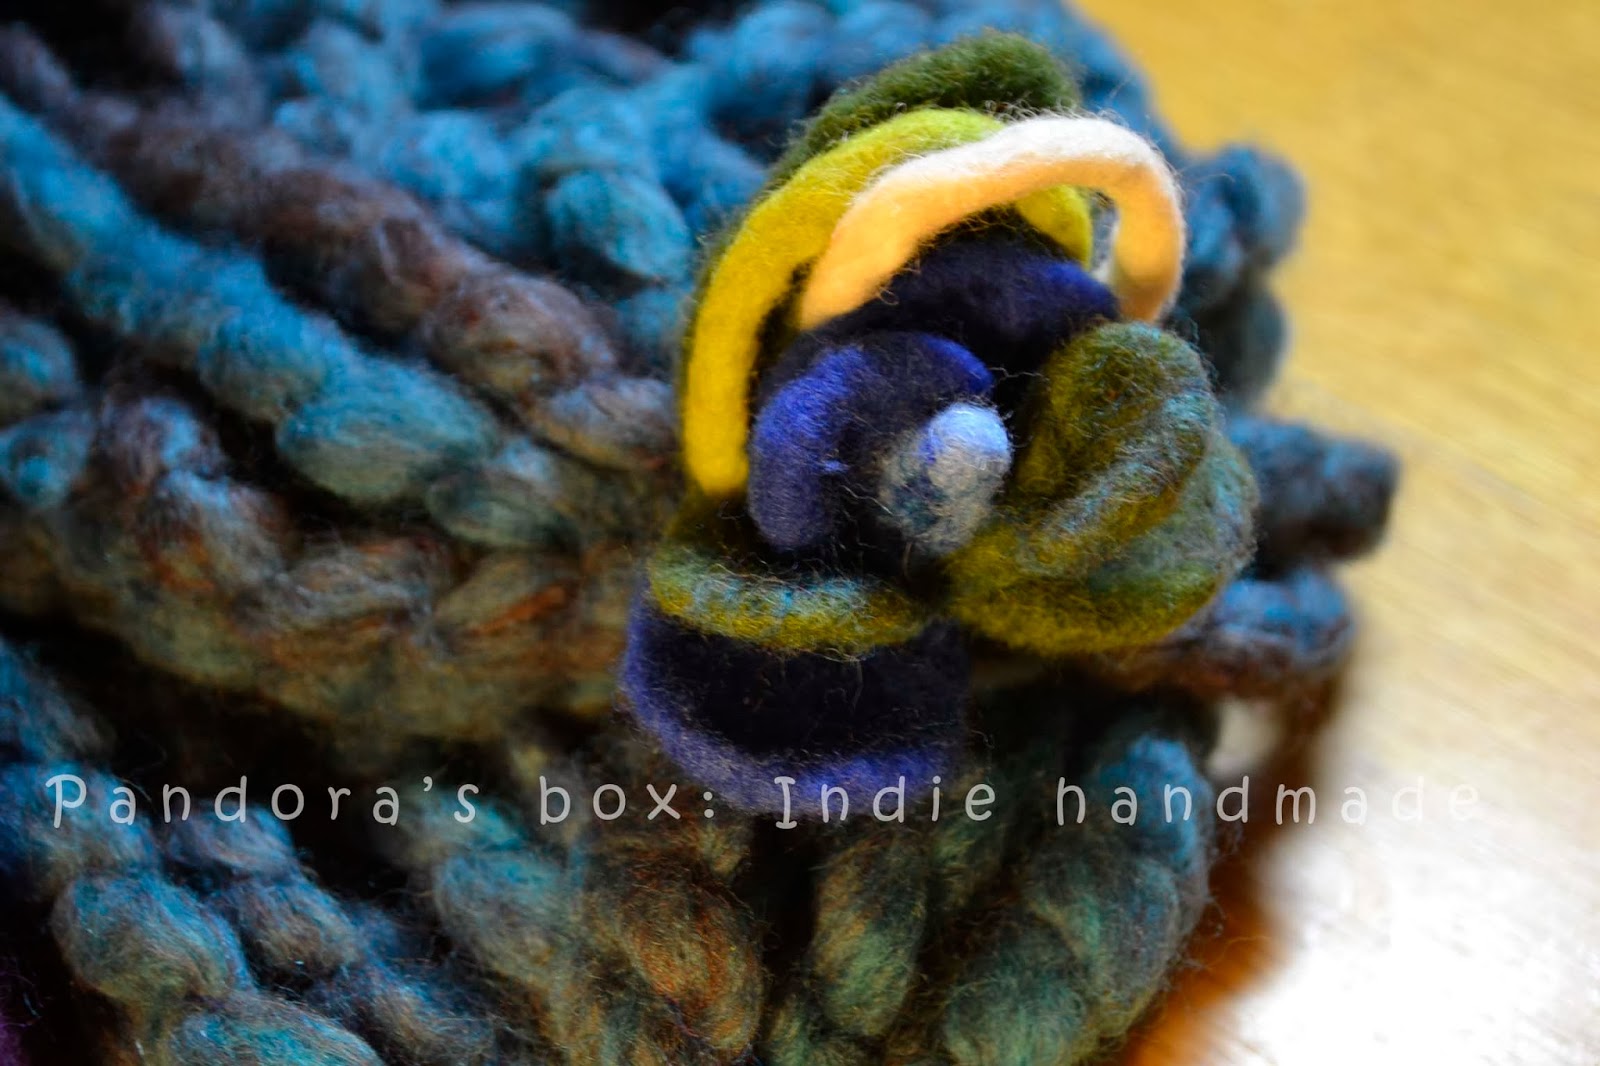 Handmade woolen scarf